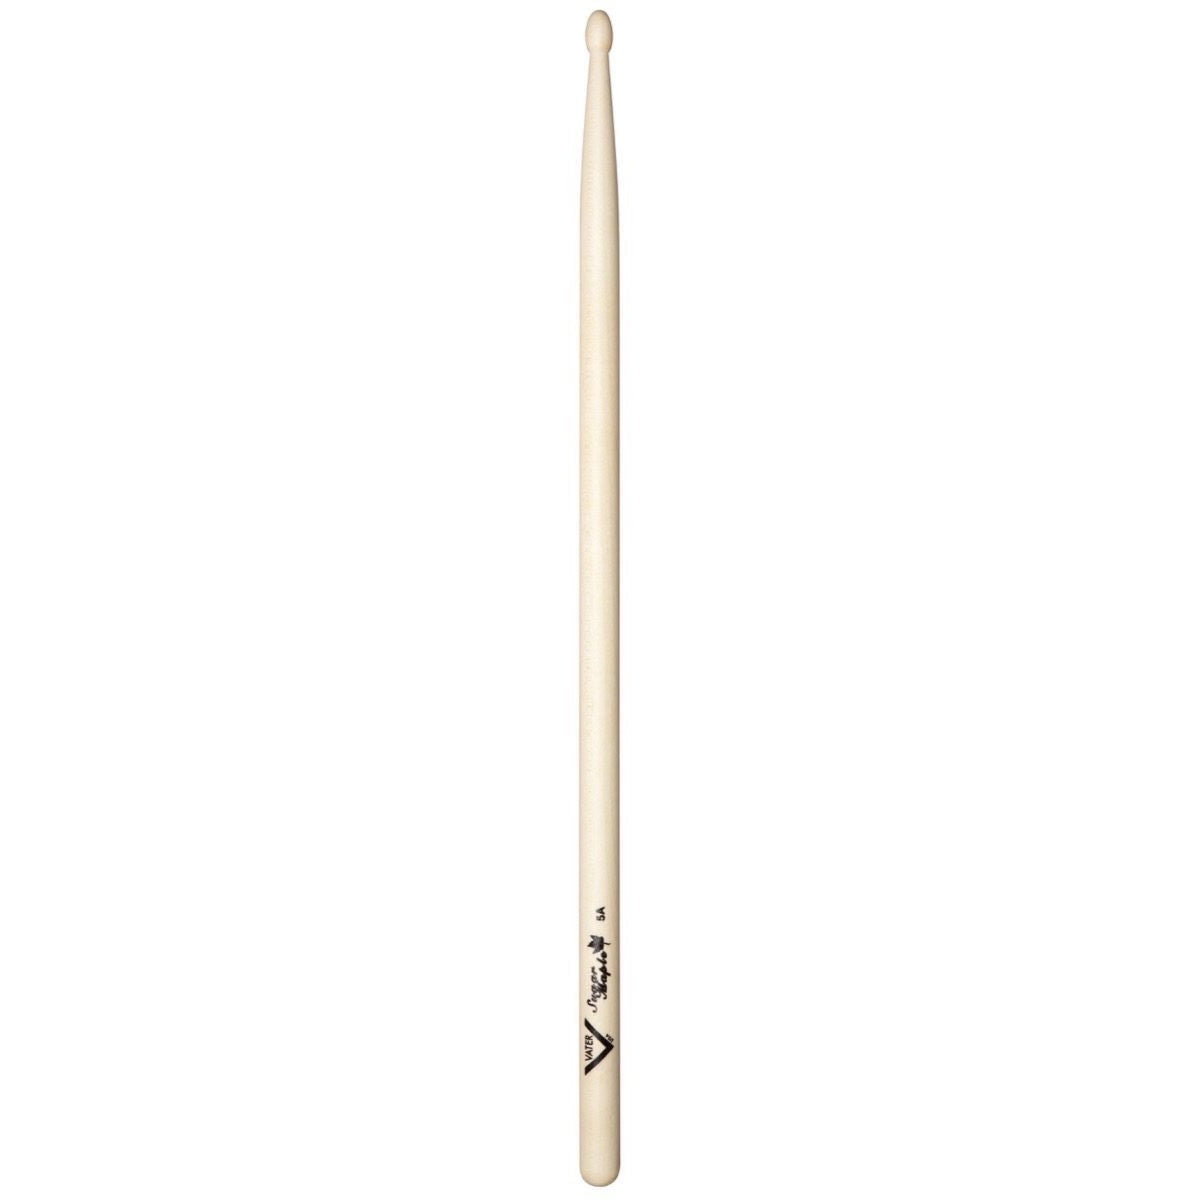 Vater Sugar Maple Drumsticks (Pair), Wood Tip, 5A